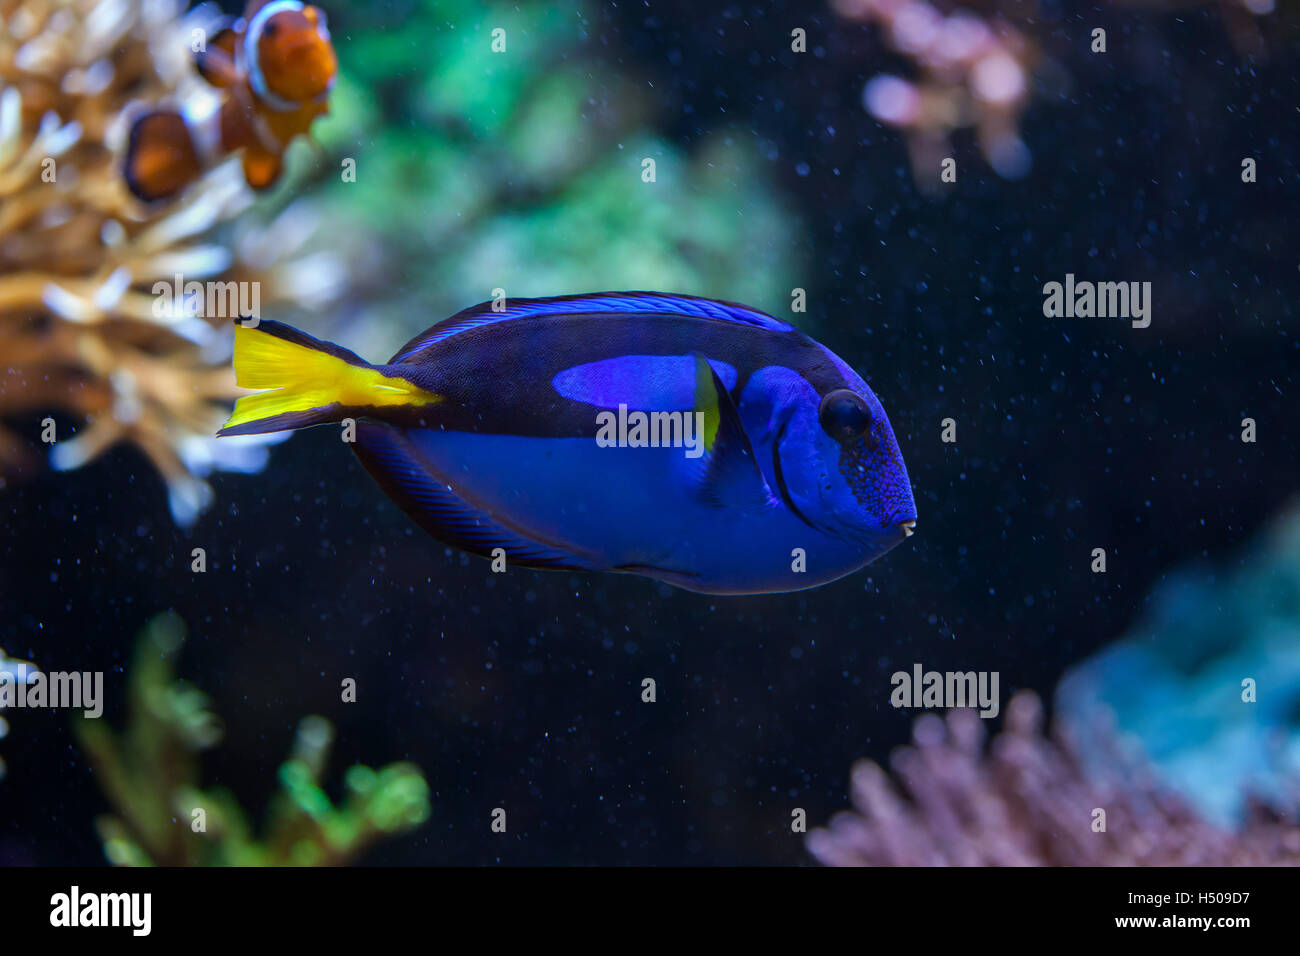 Blue surgeonfish (Paracanthurus hepatus), also known as the blue tang. Wildlife animal. Stock Photo